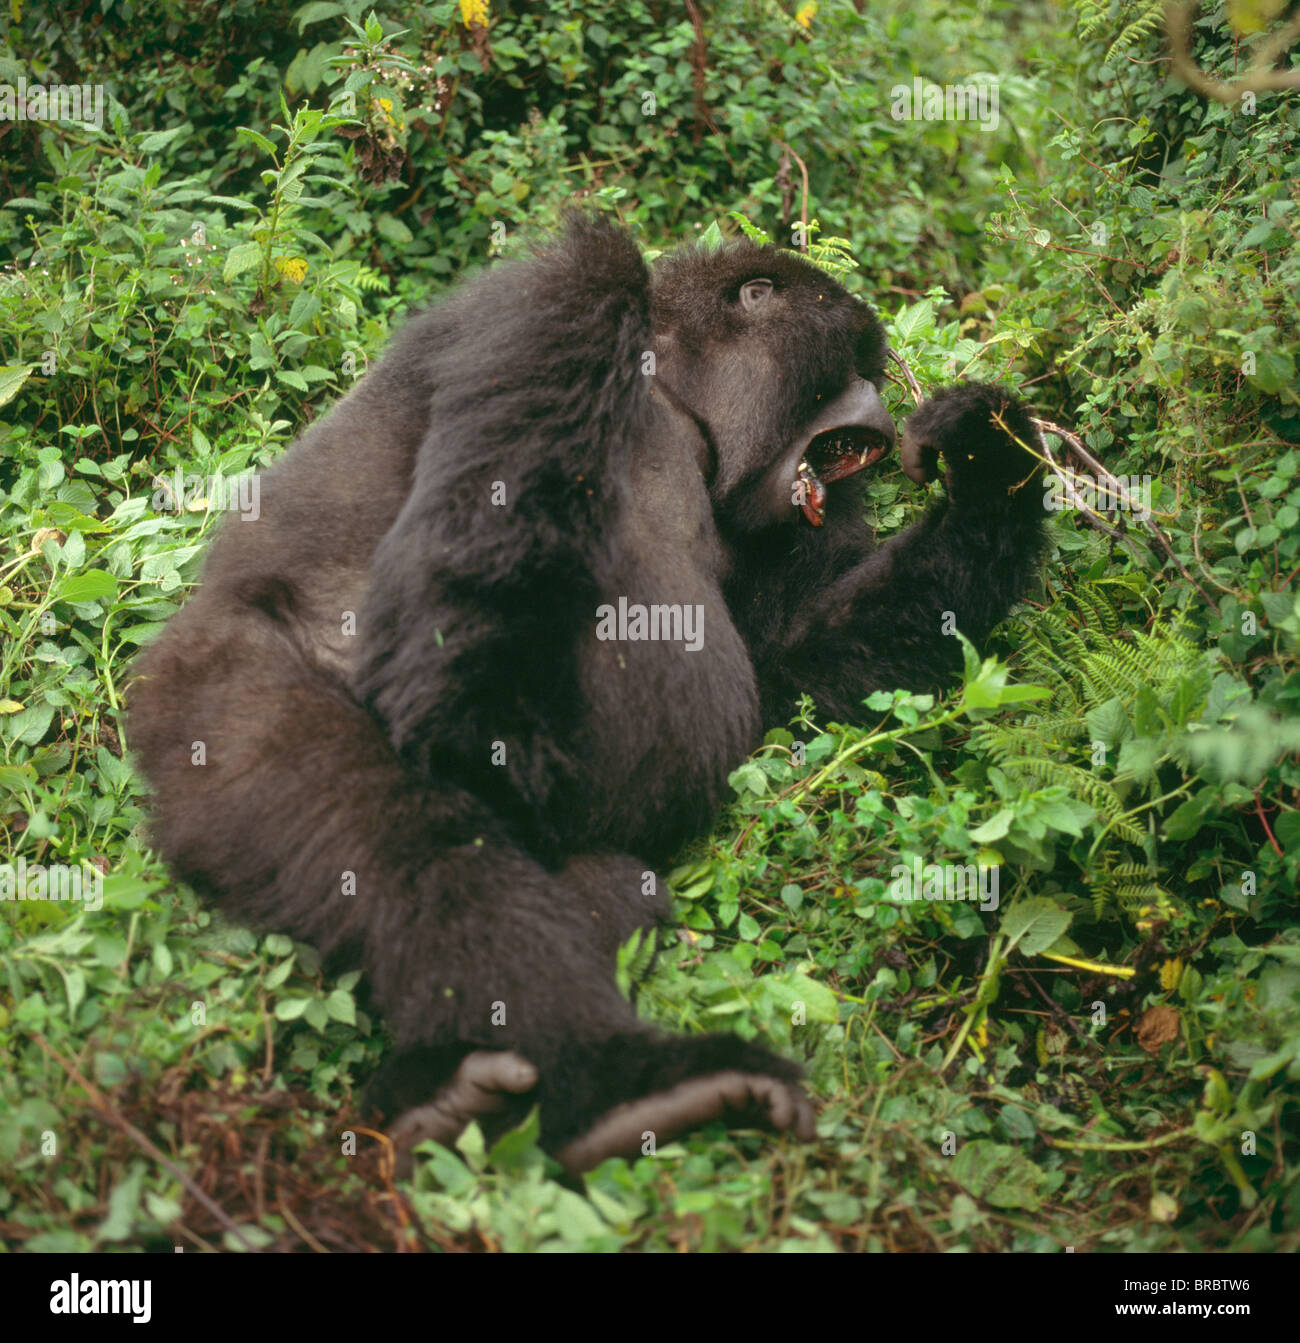 Gorille de montagne (Gorilla gorilla beringei), femelle, bâillements, Volcans Virunga, Rwanda Banque D'Images